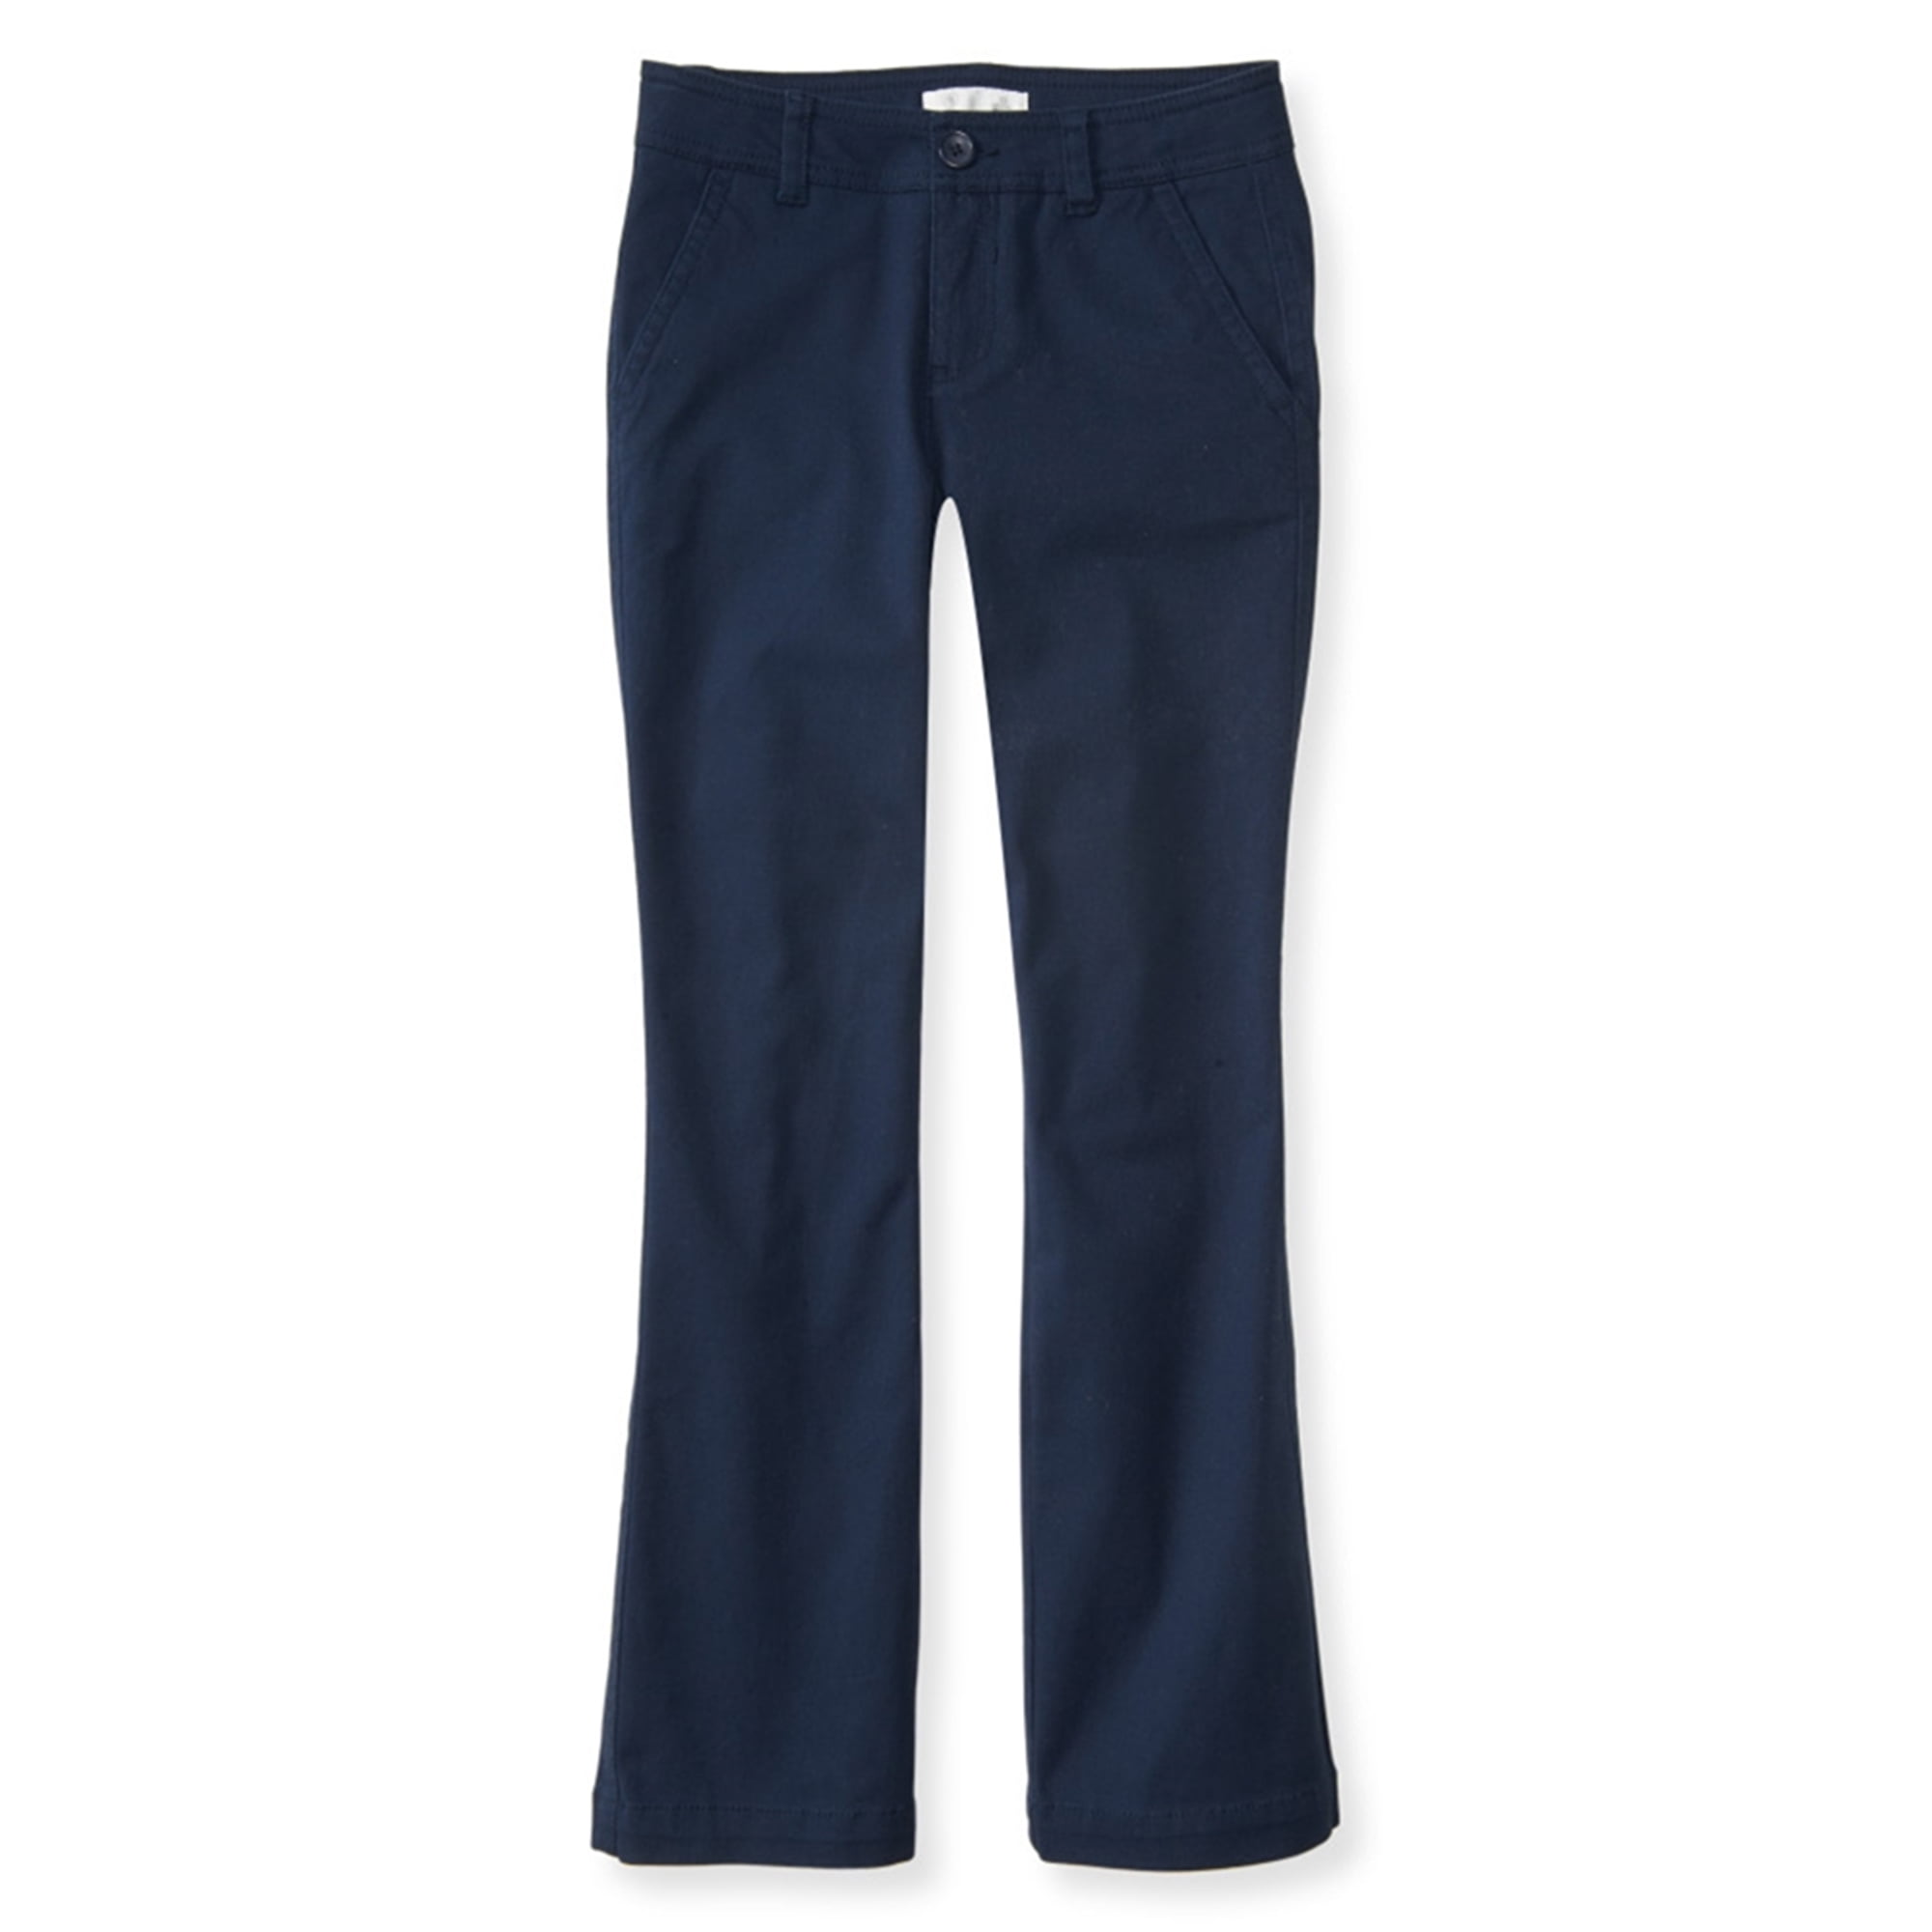 Men's Bootcut Jeans | Buckle | Mens jeans, Mens jeans fit, Stretch jeans